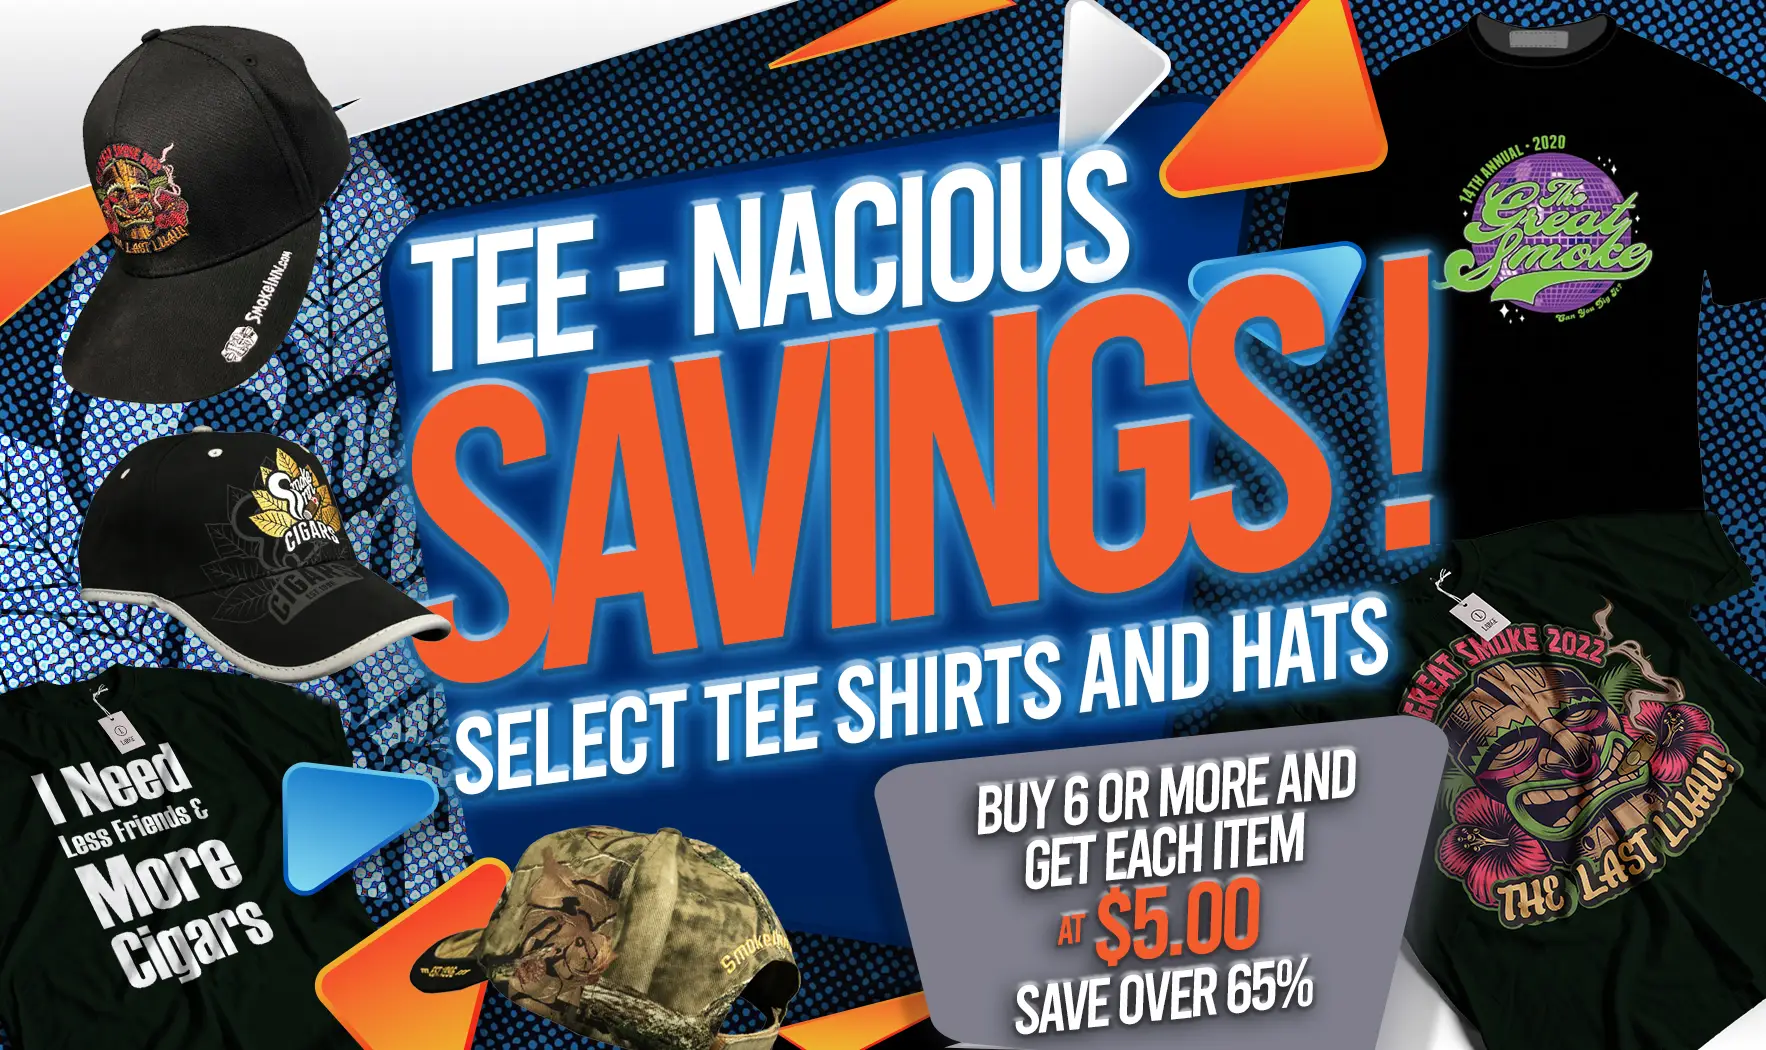 Tee-nacious Savings!